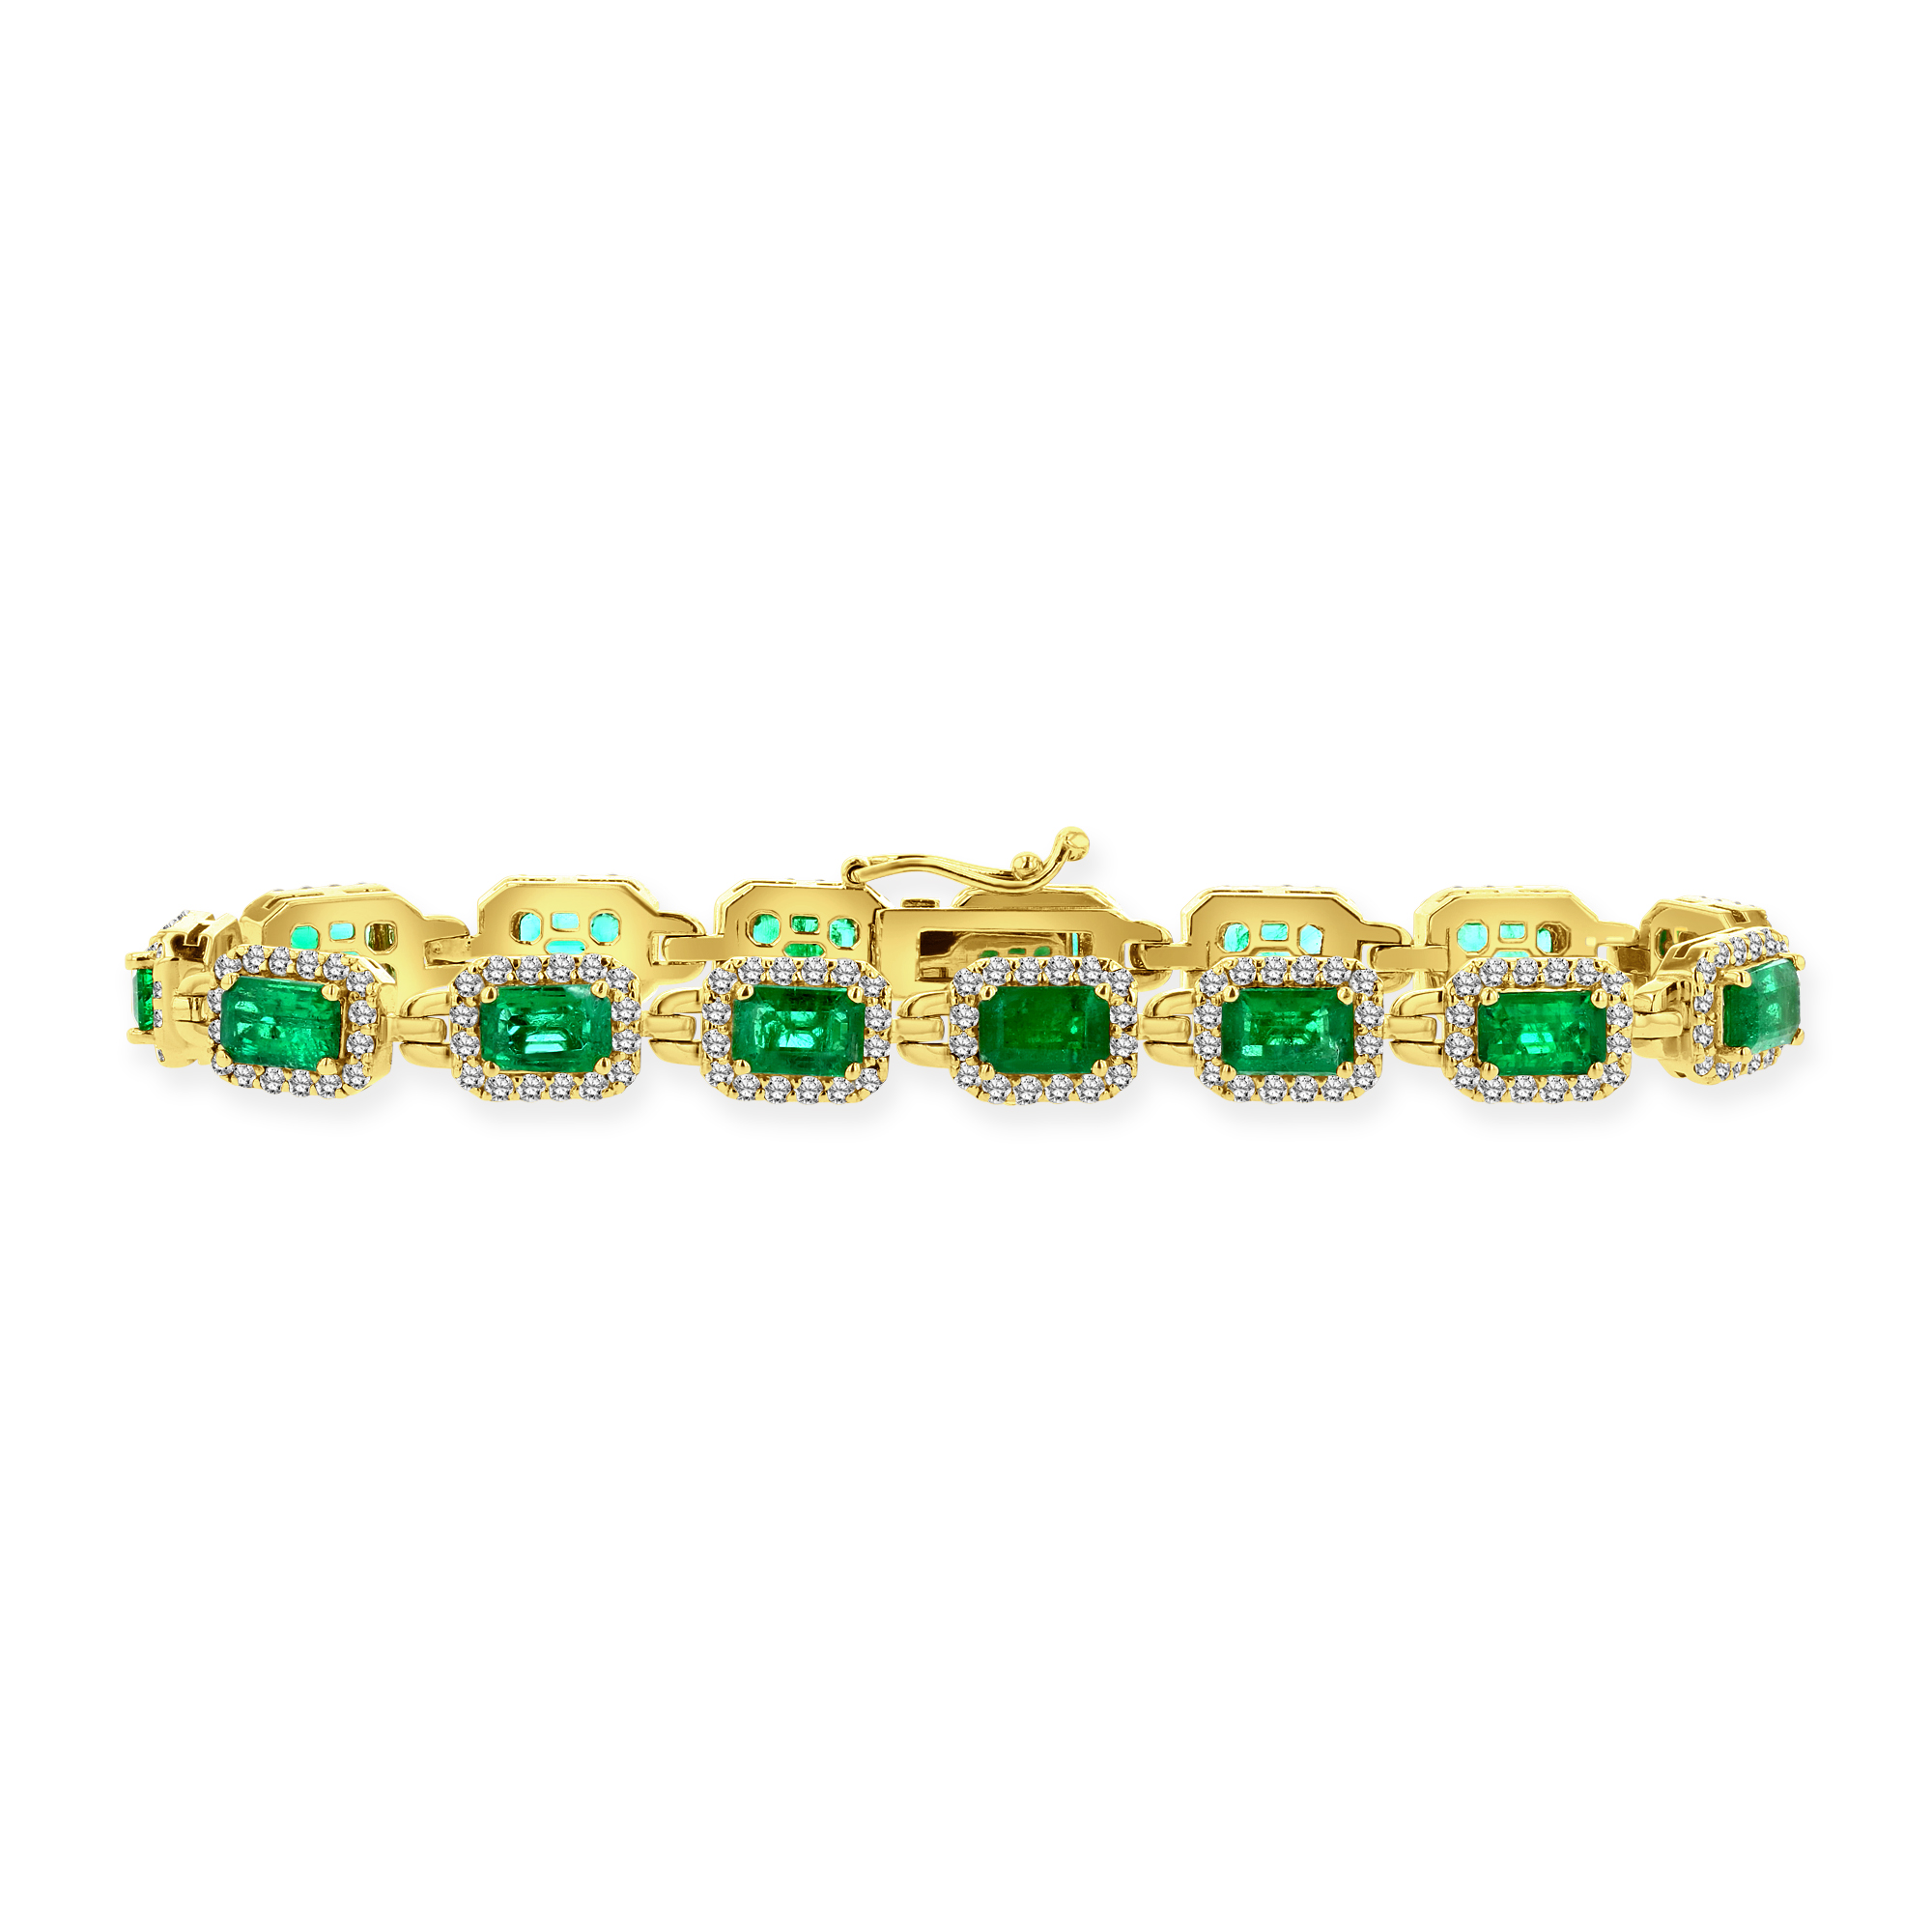 View 2.50ctw Diamond and 7.40ctw Emerald Cut Emerald Bracelet in 14k Gold